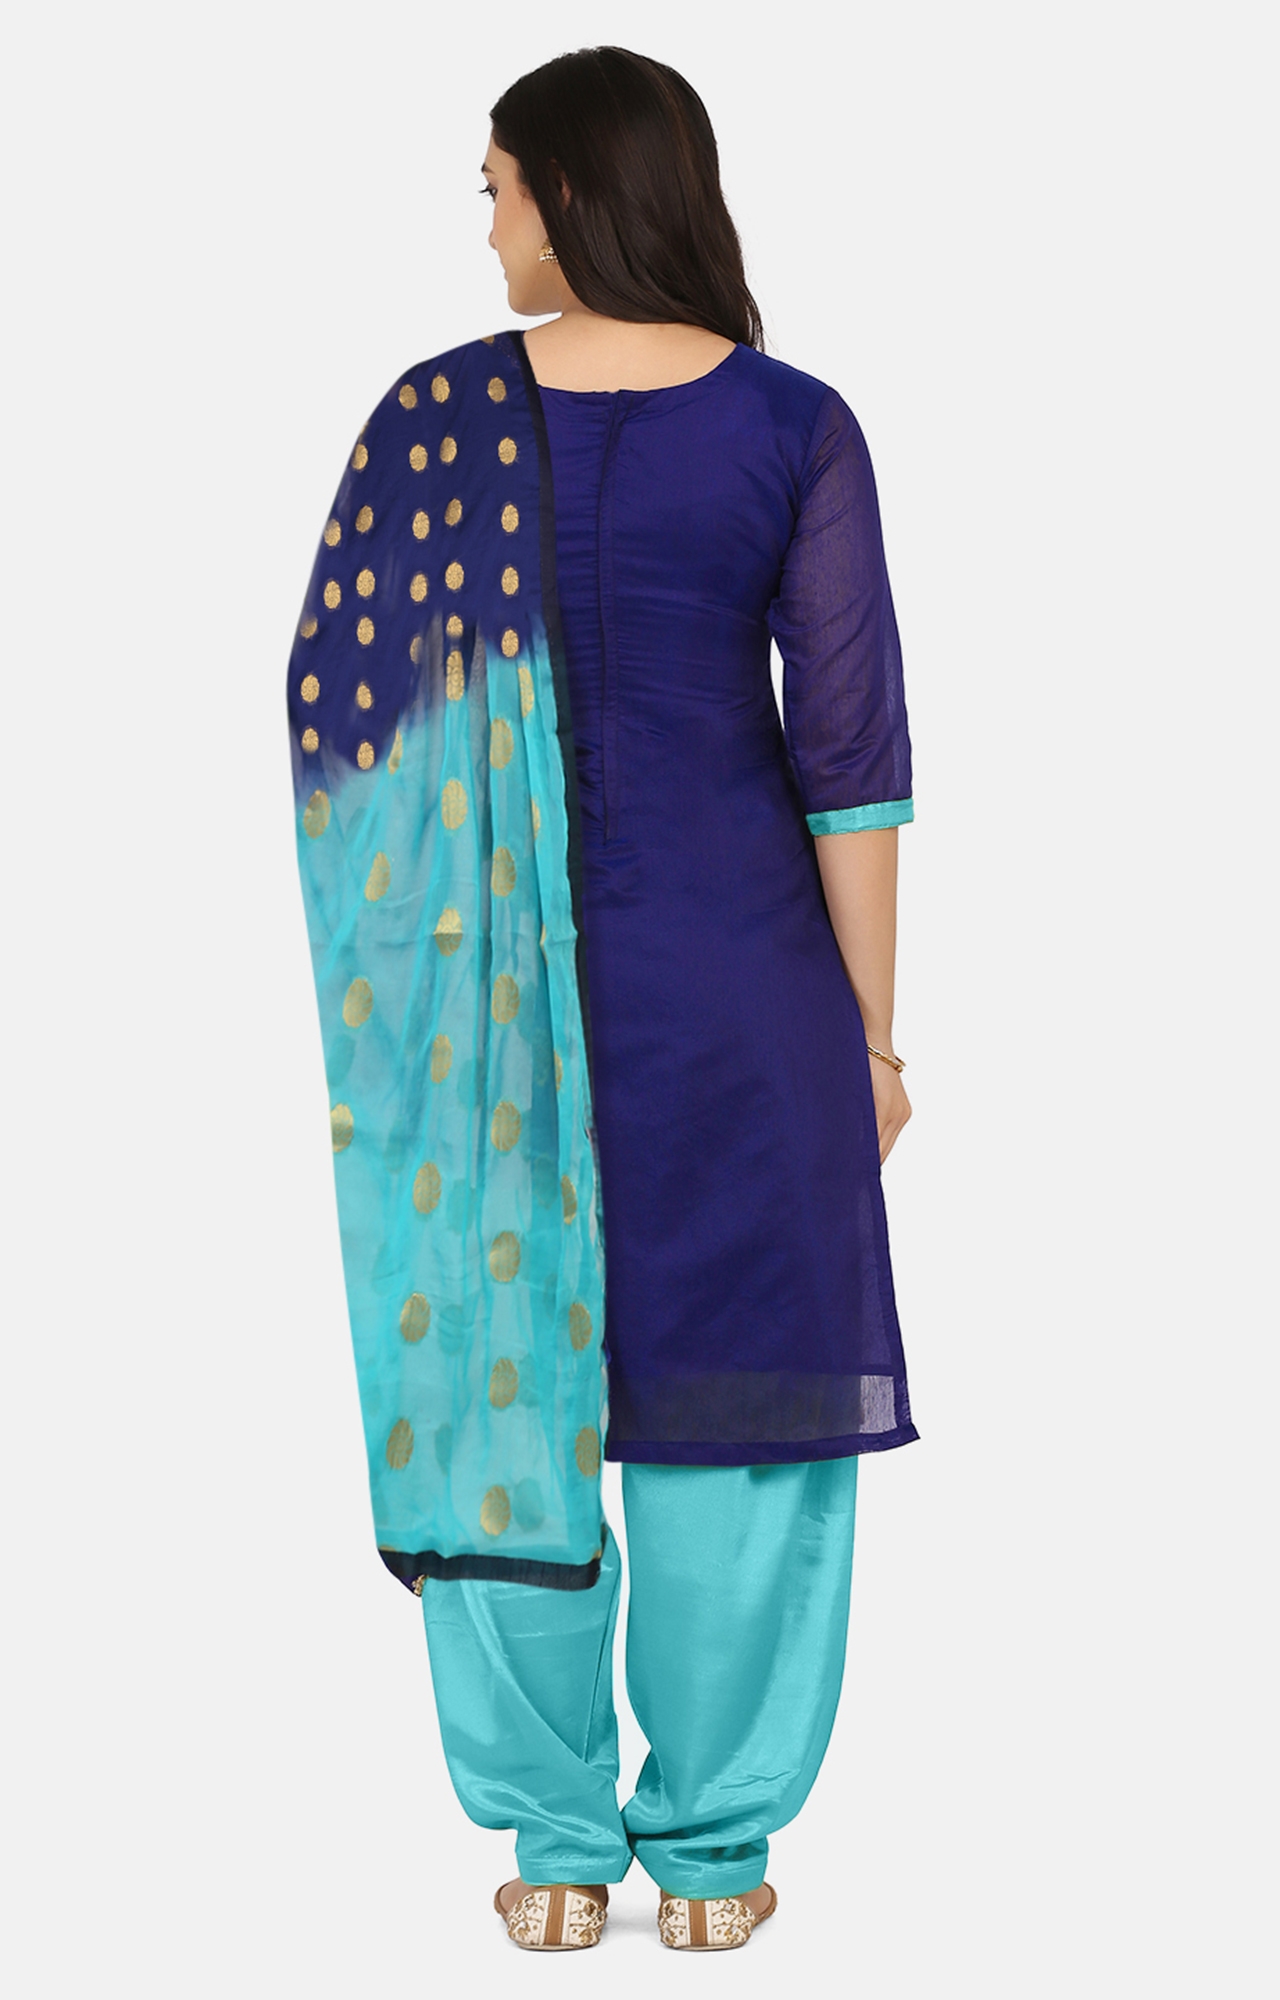 Buy Roha Fab 100% Cotton Navy Blue White Orange Designer Combination Salwar  Suit Dress Material For Girls Women at Amazon.in